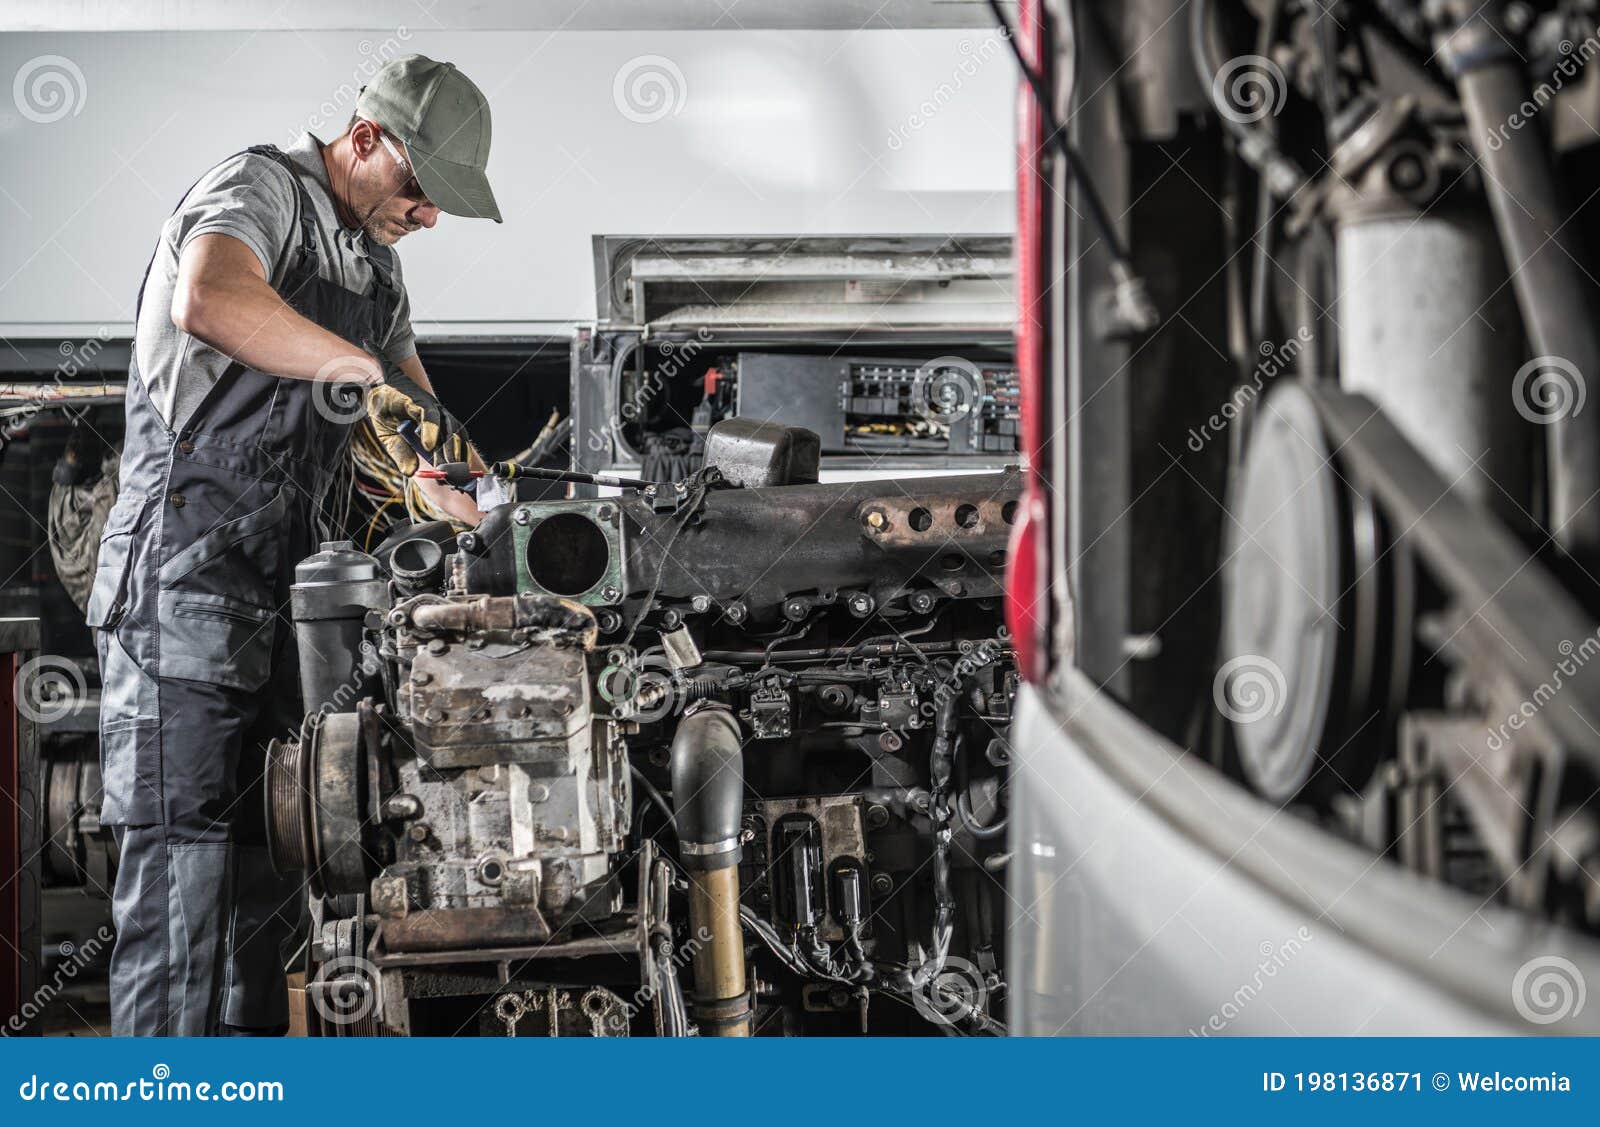 pro automotive mechanic repair diesel engine